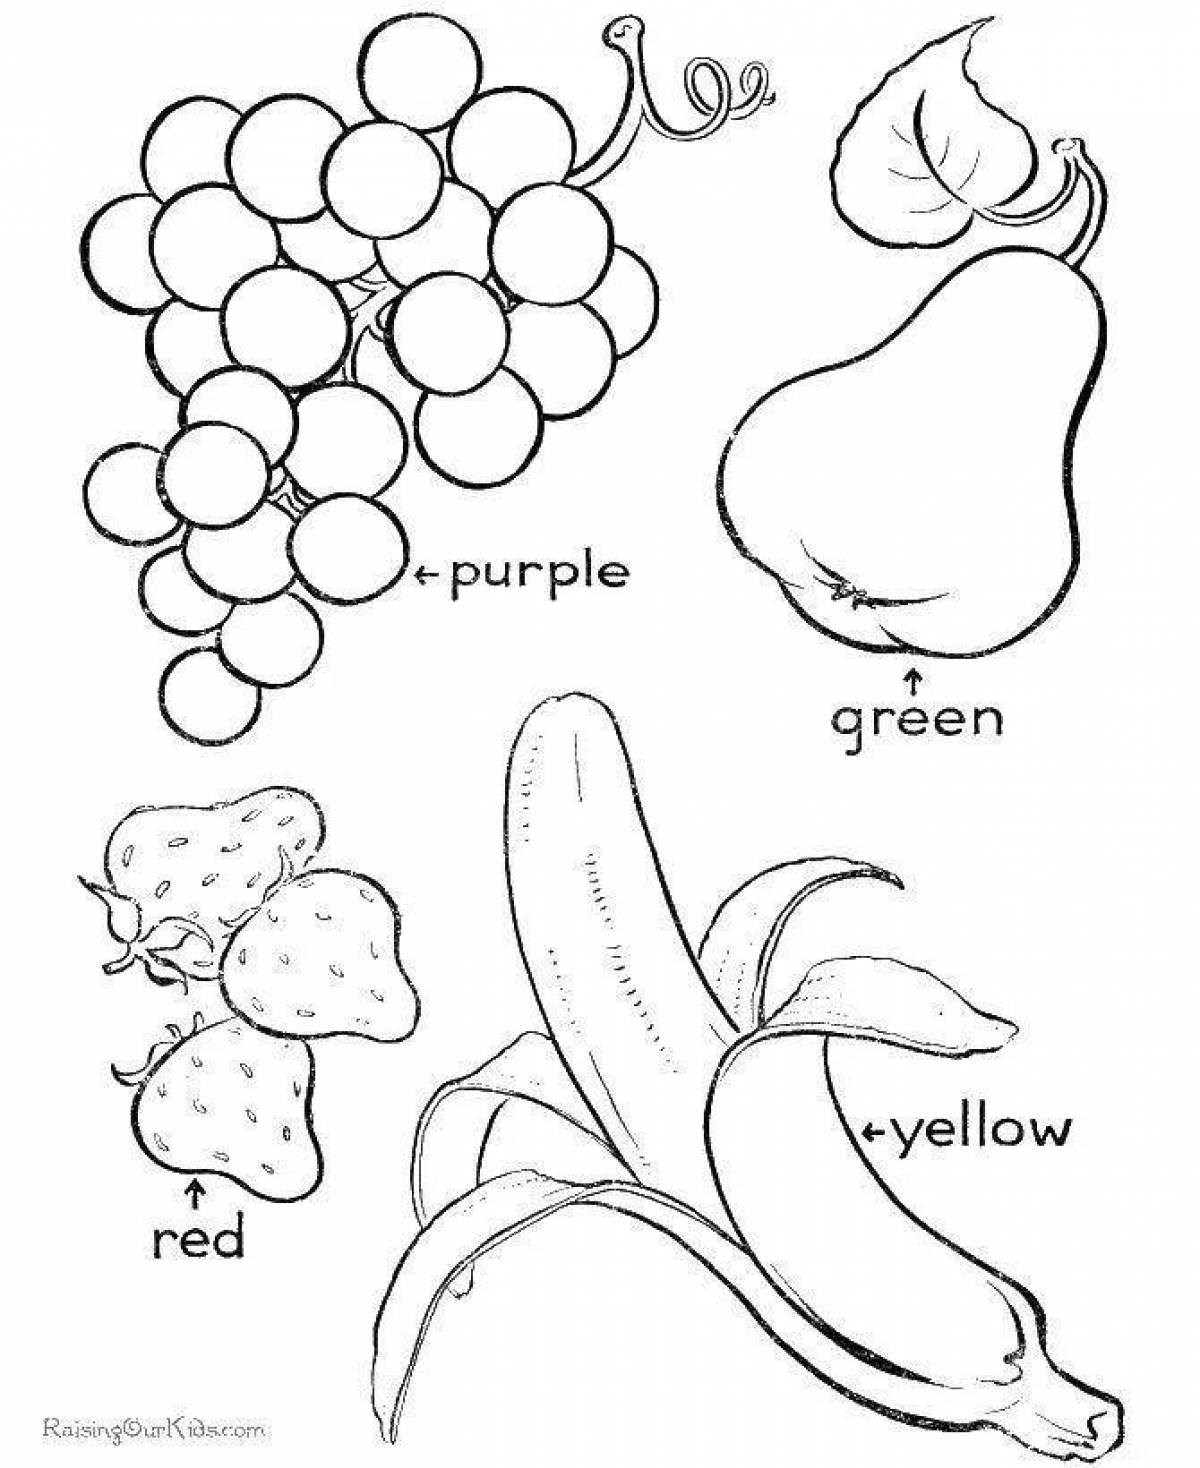 Elegant fruits coloring book for kids